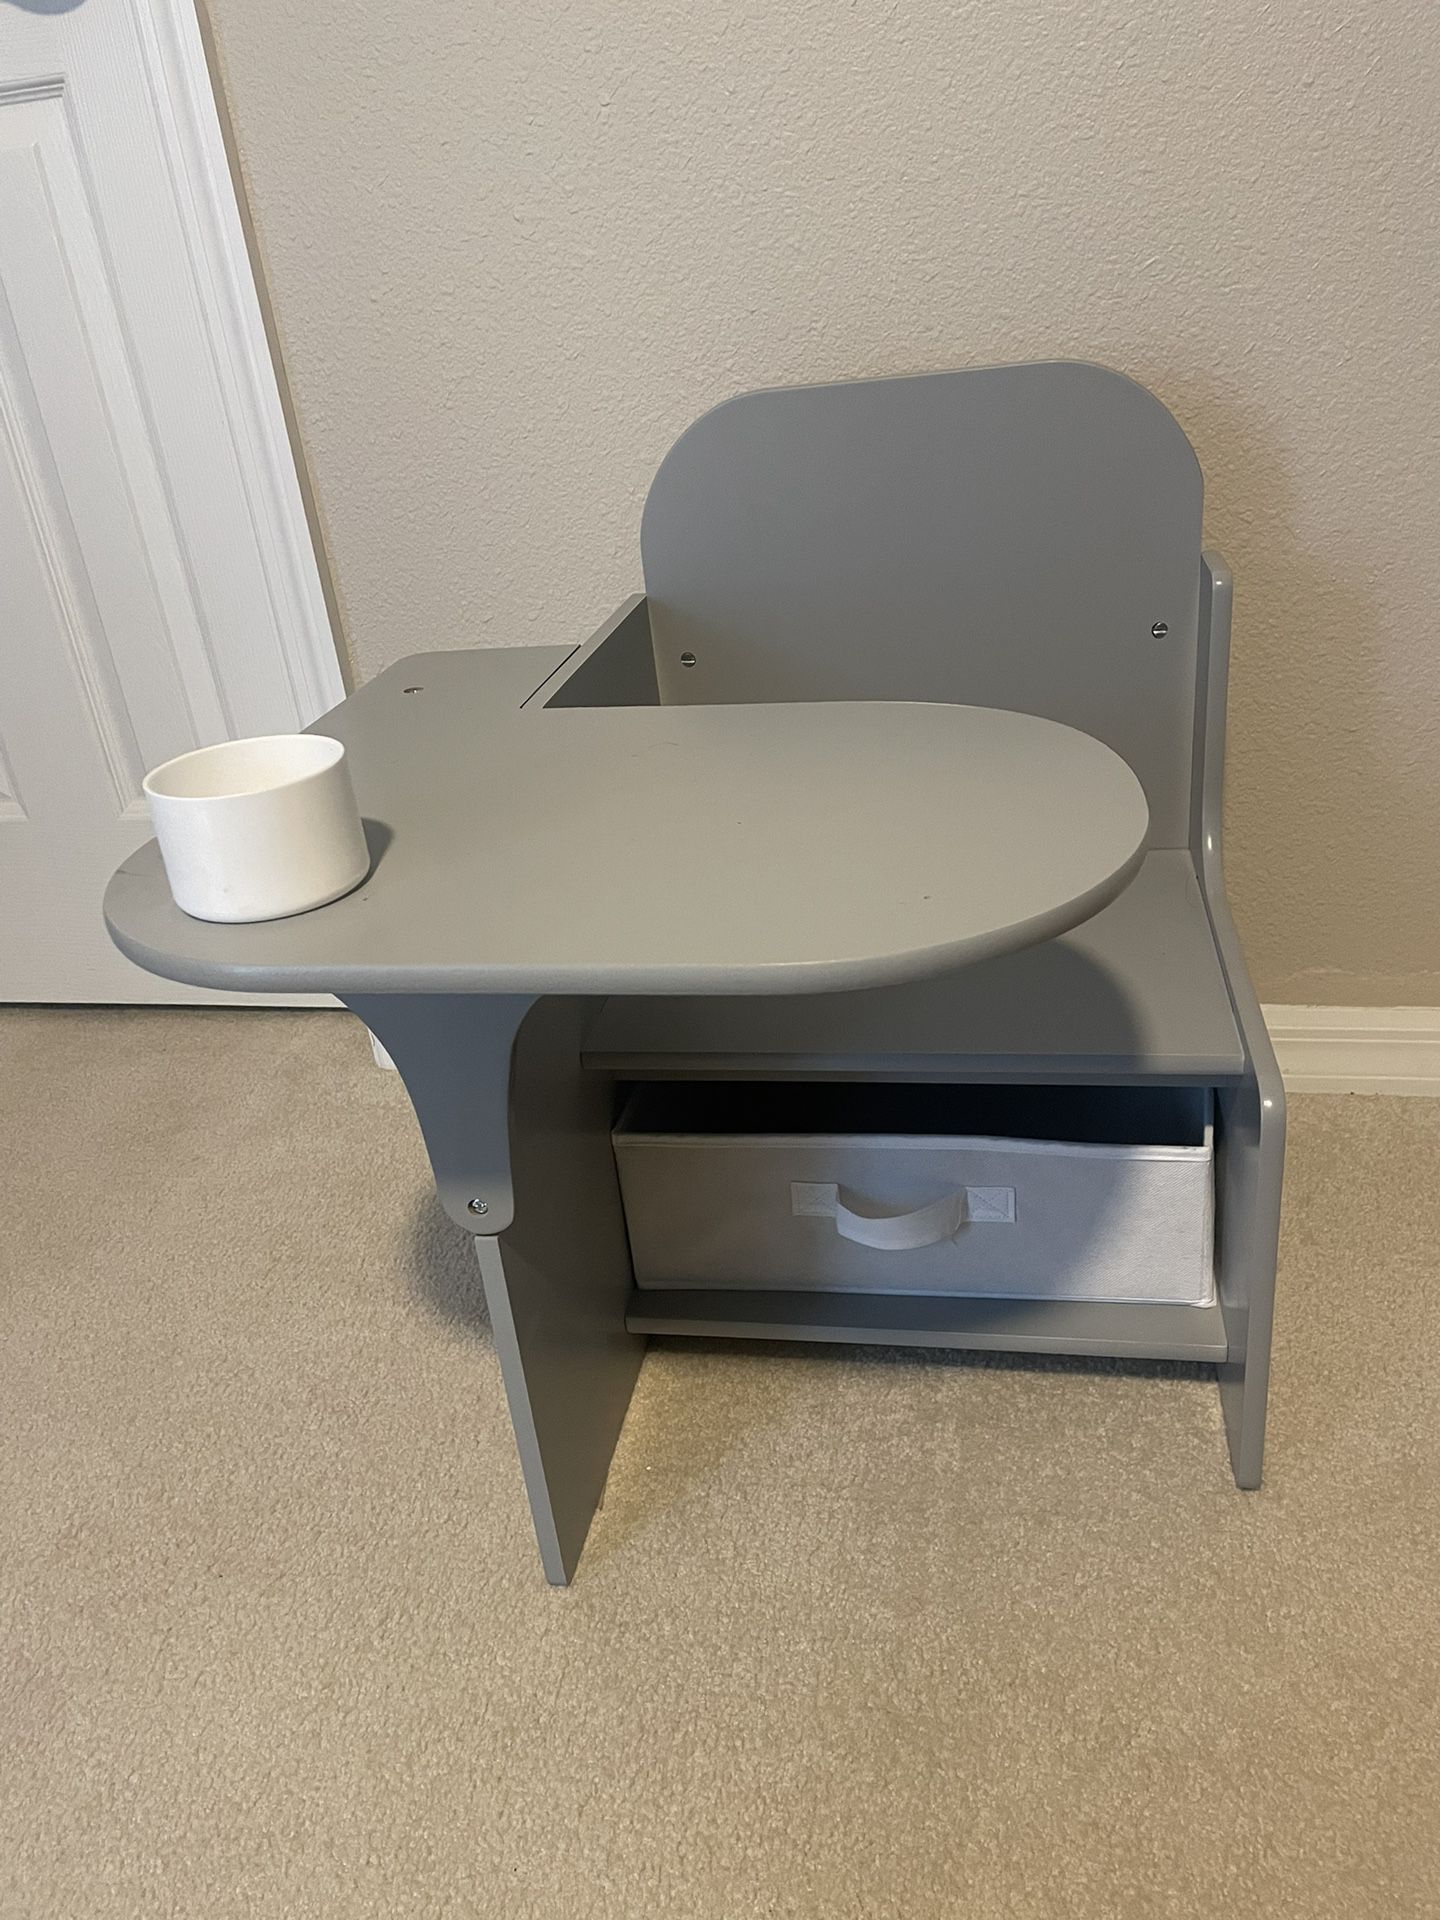 MySize Chair Desk with Storage Bin - Greenguard Gold Certified